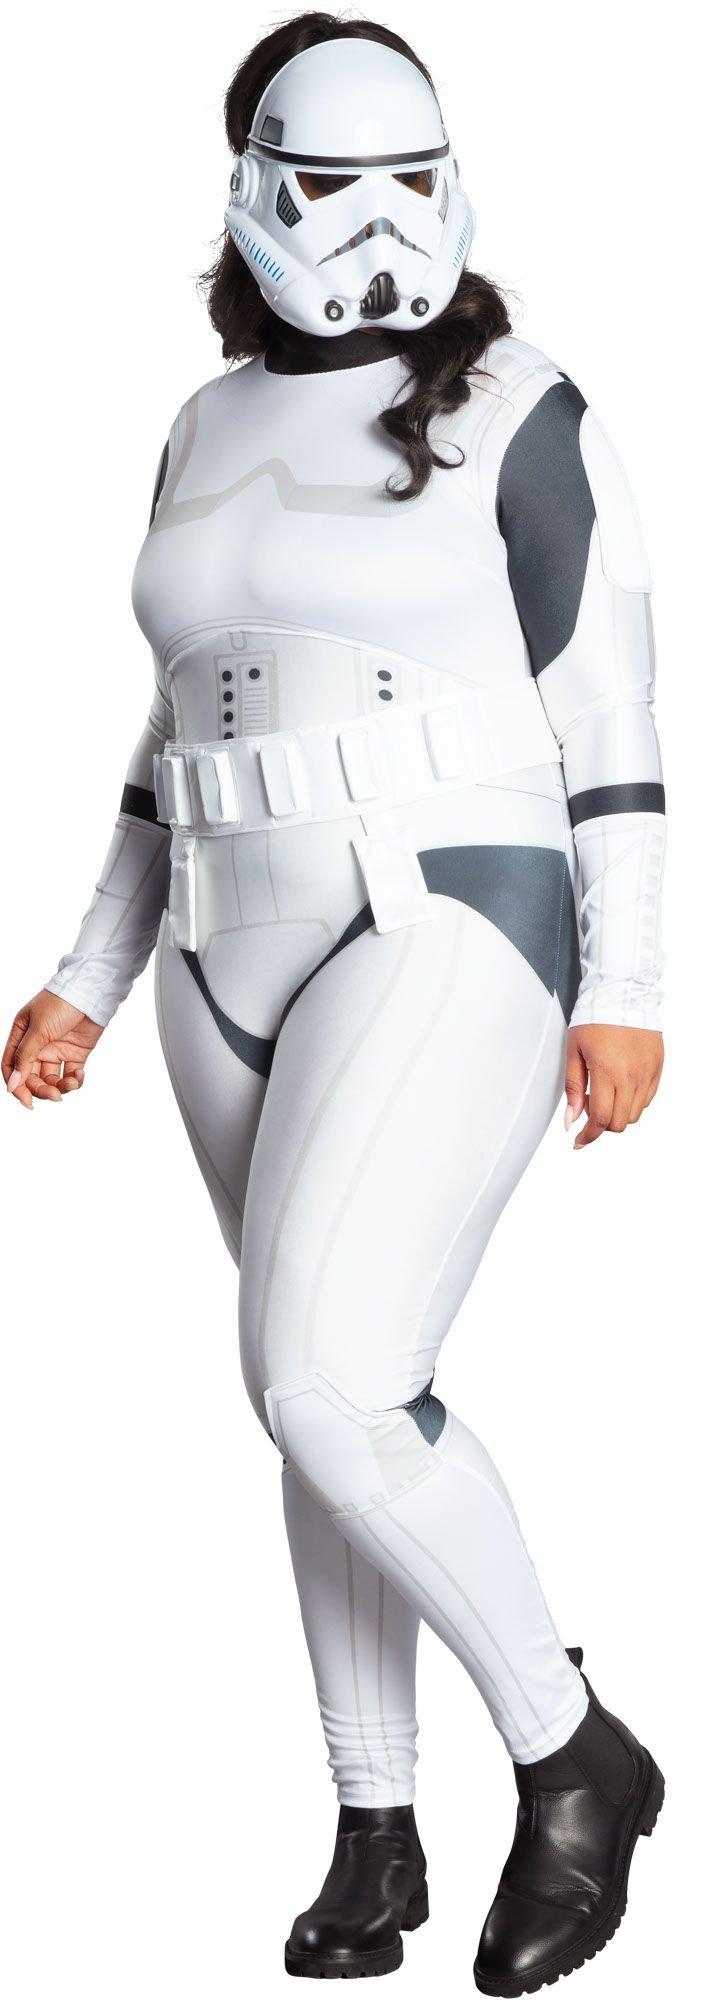 Adult Stormtrooper Costume Plus Size - Star Wars